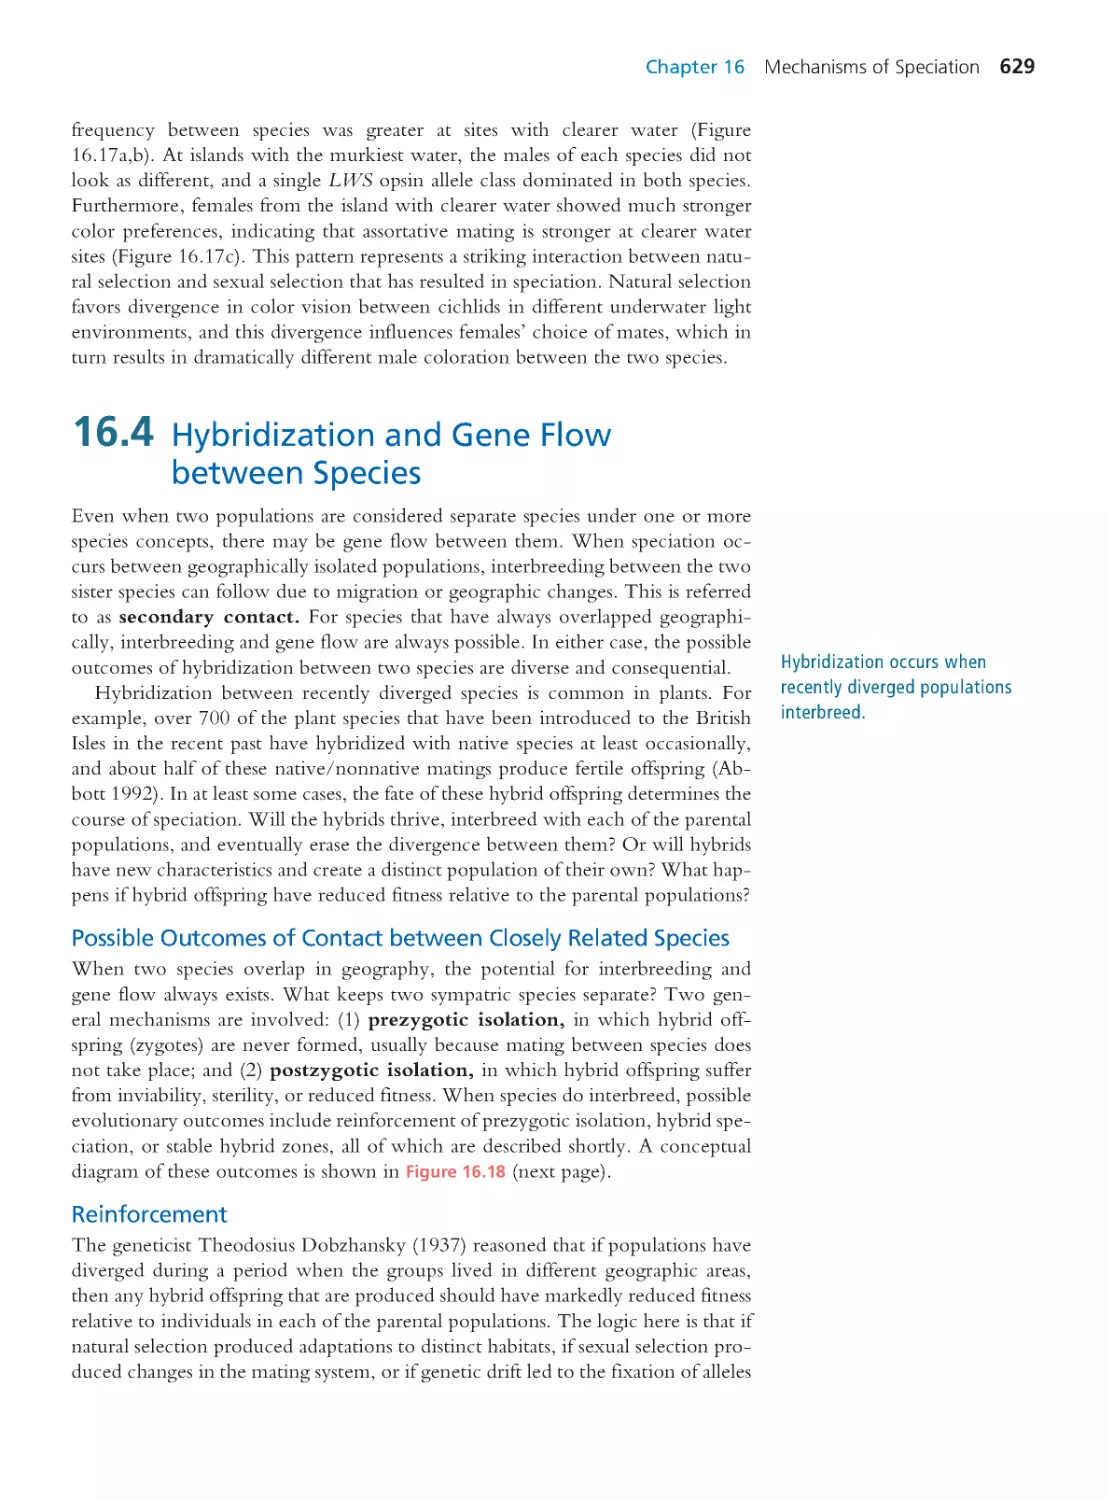 16.4 Hybridization and Gene Flow between Species